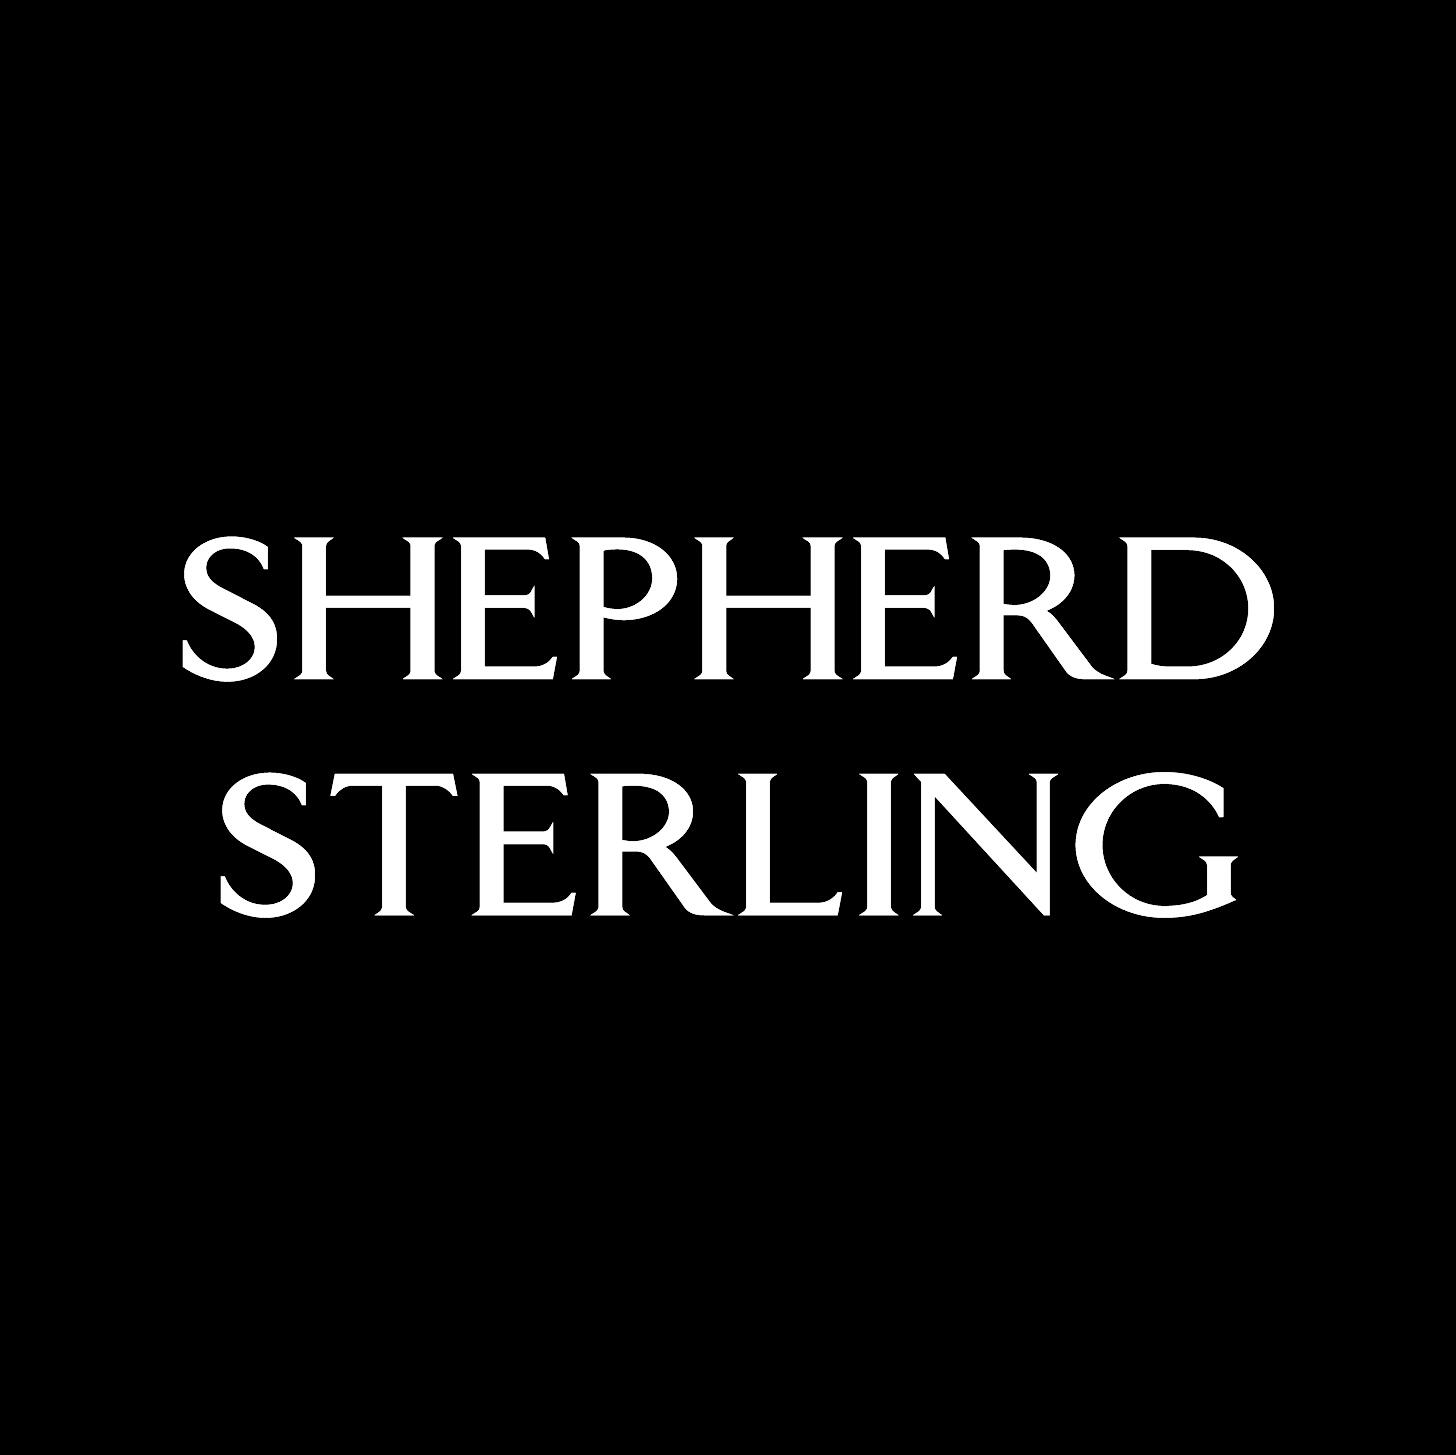 Shepherd Sterling - Bay Area Improvements, Interior Design ...